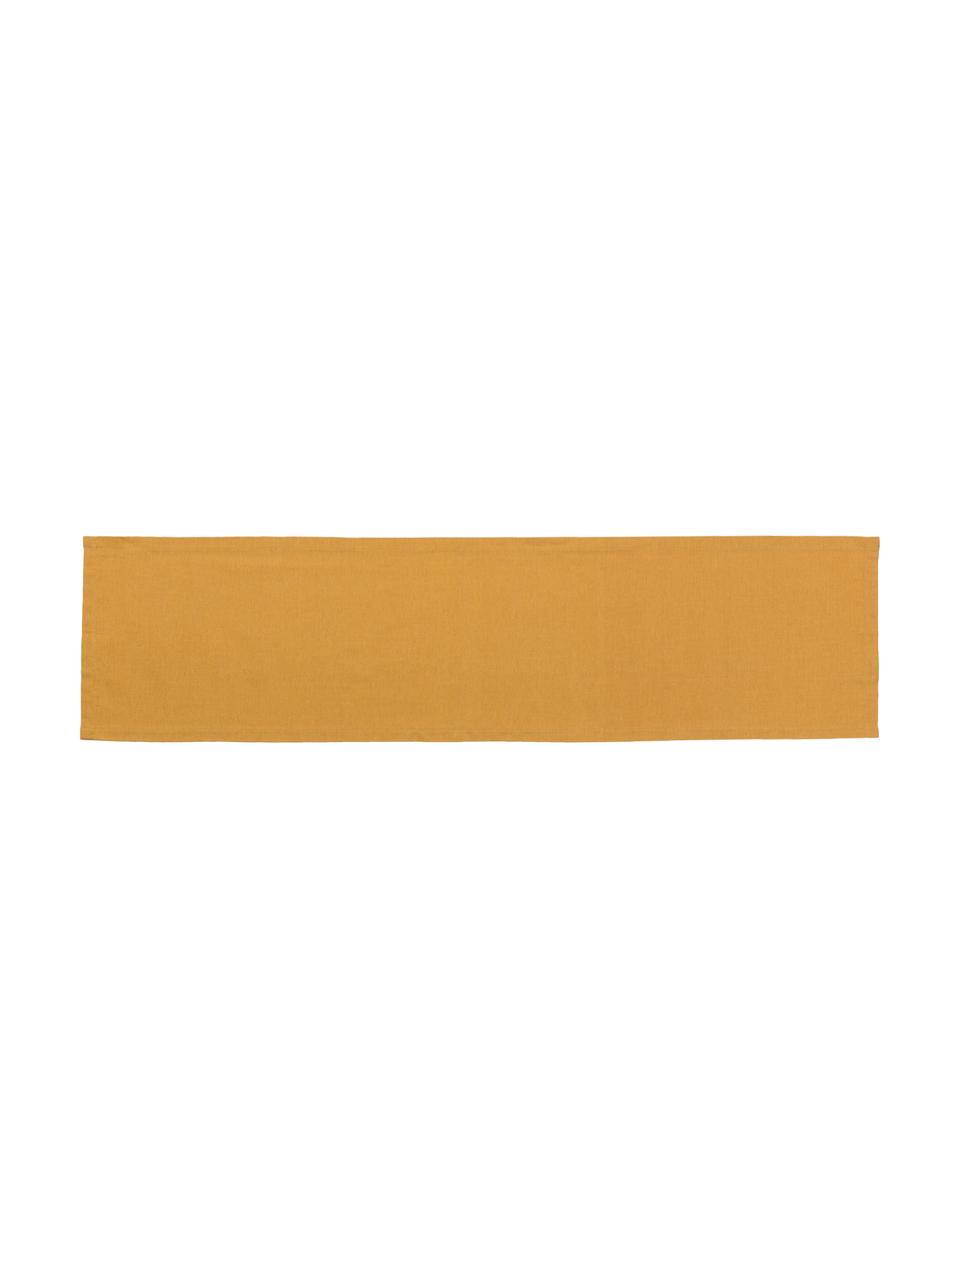 Chemin de table jaune Riva, Jaune moutarde, larg. 40 x long. 150 cm